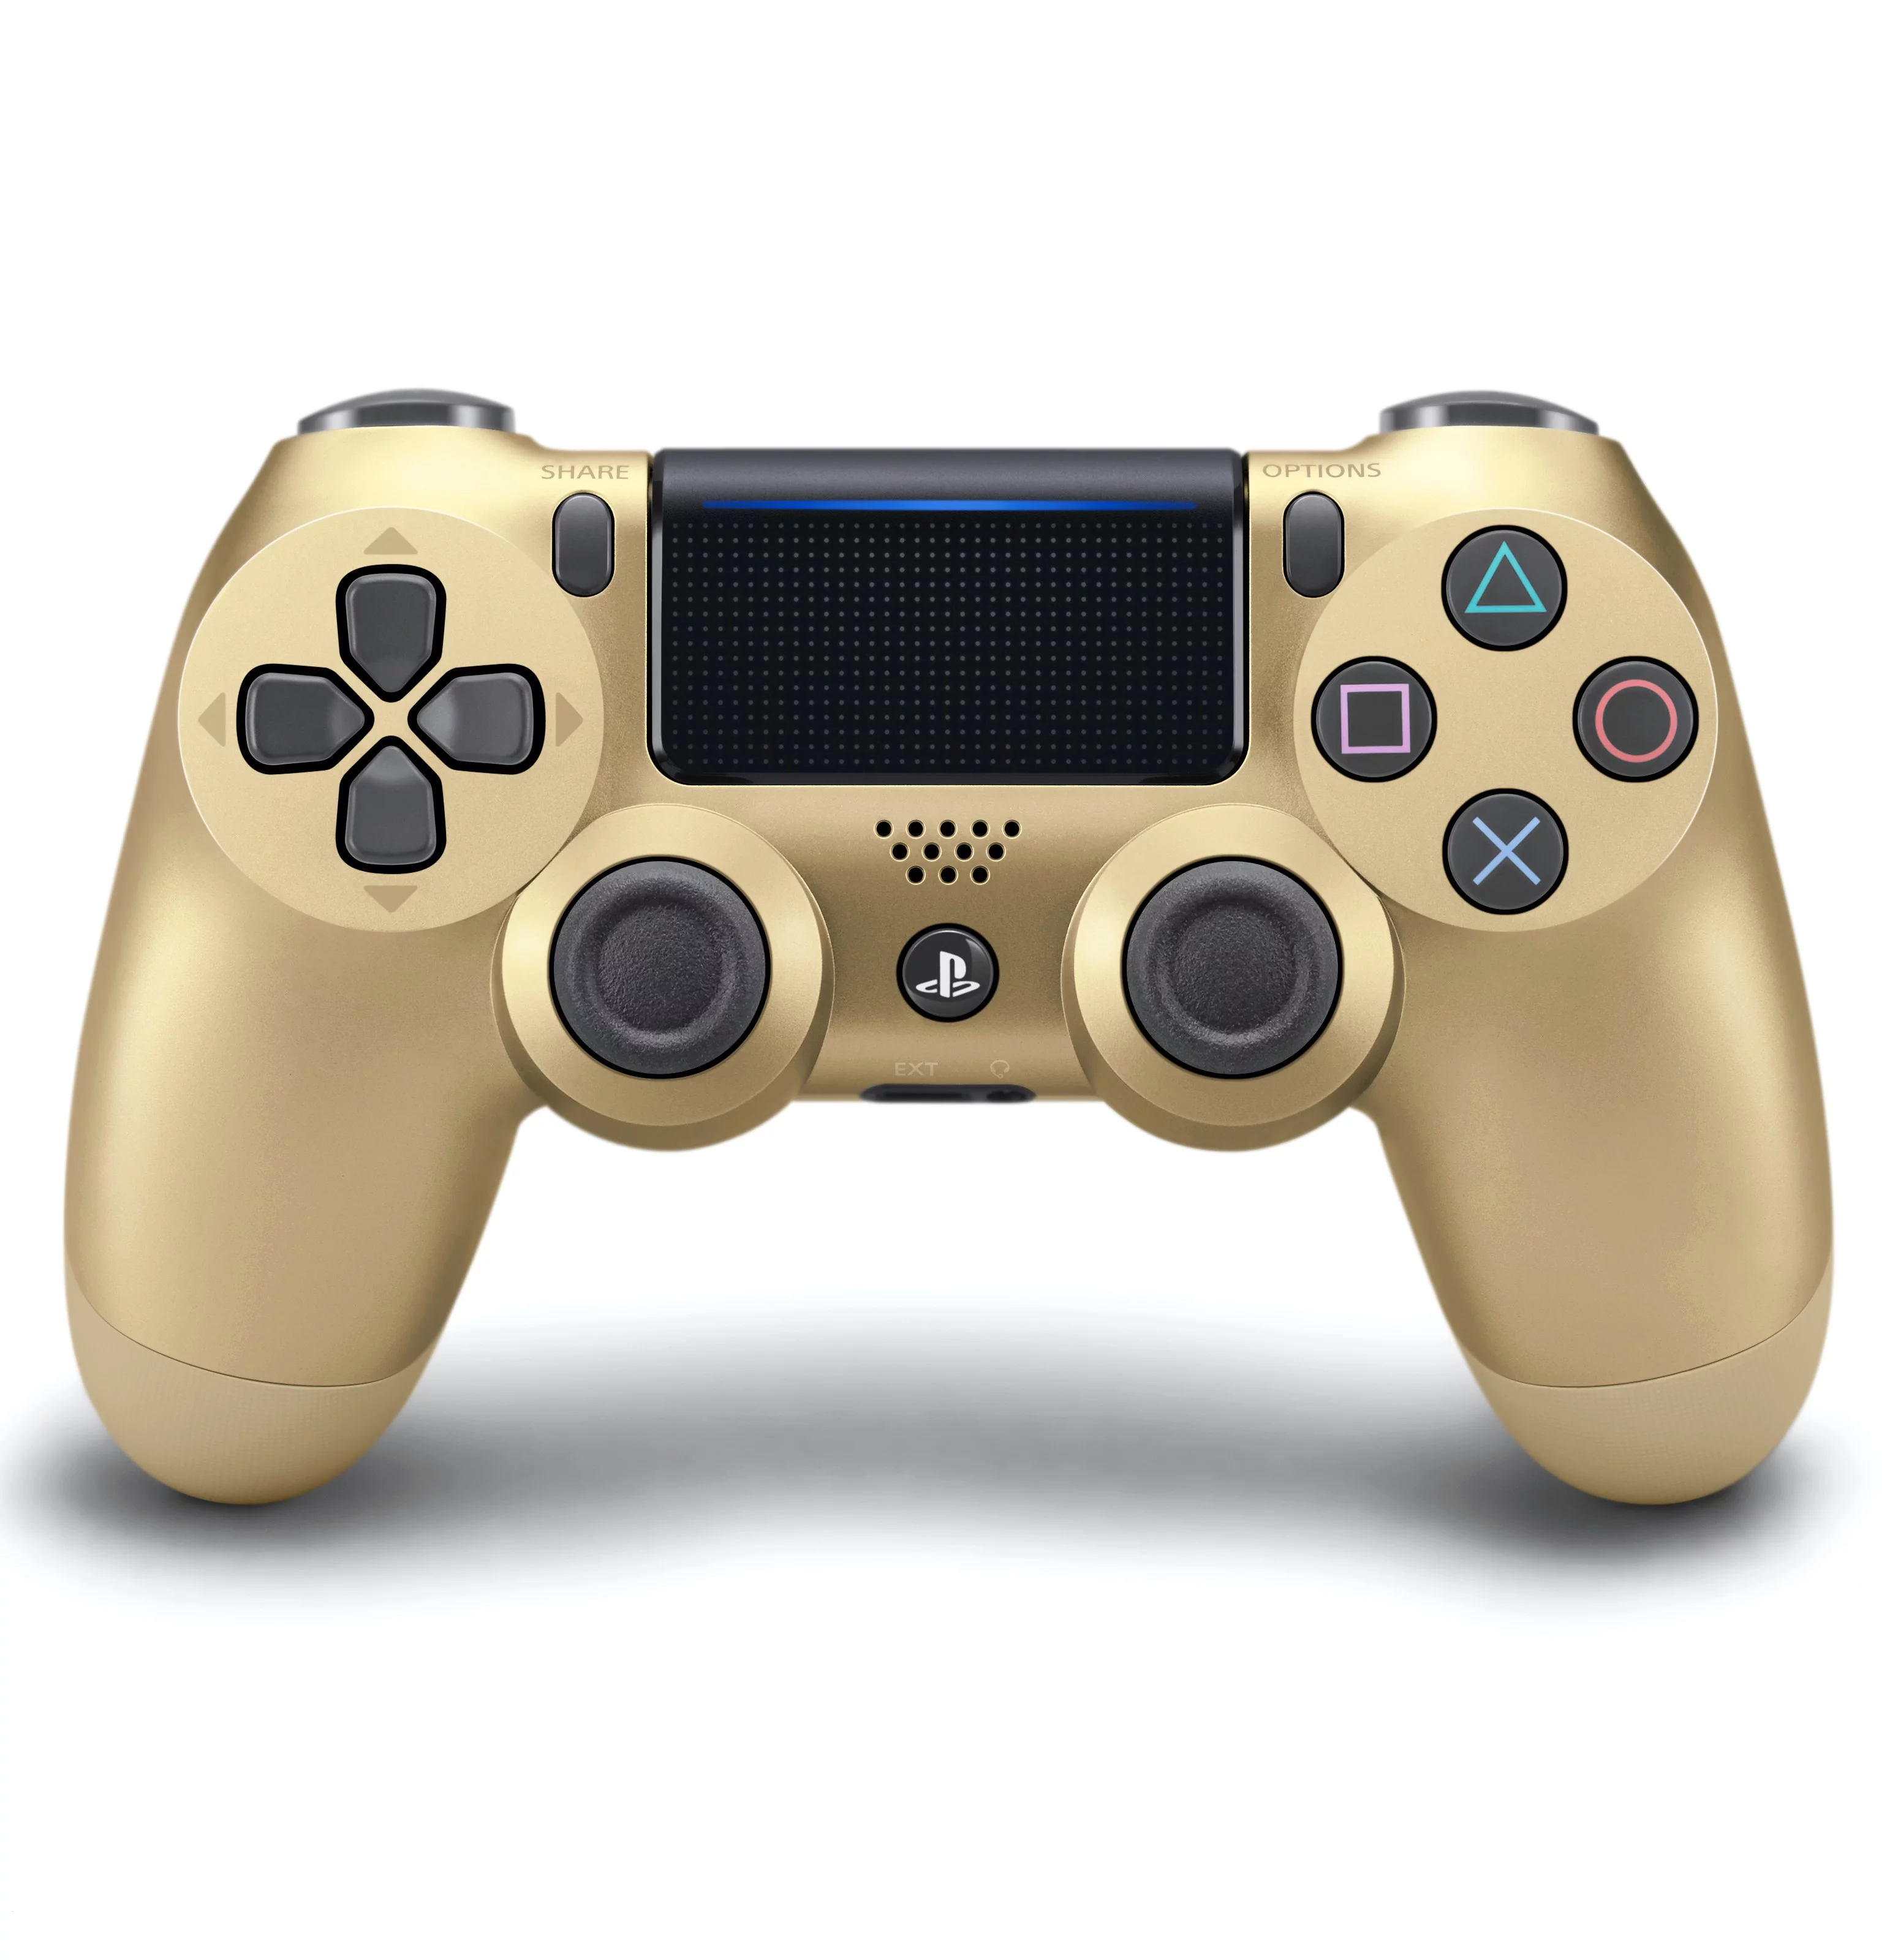 Sony PlayStation 4 DualShock 4 Controller, Gold (Bilingual English/Espanol Packaging)